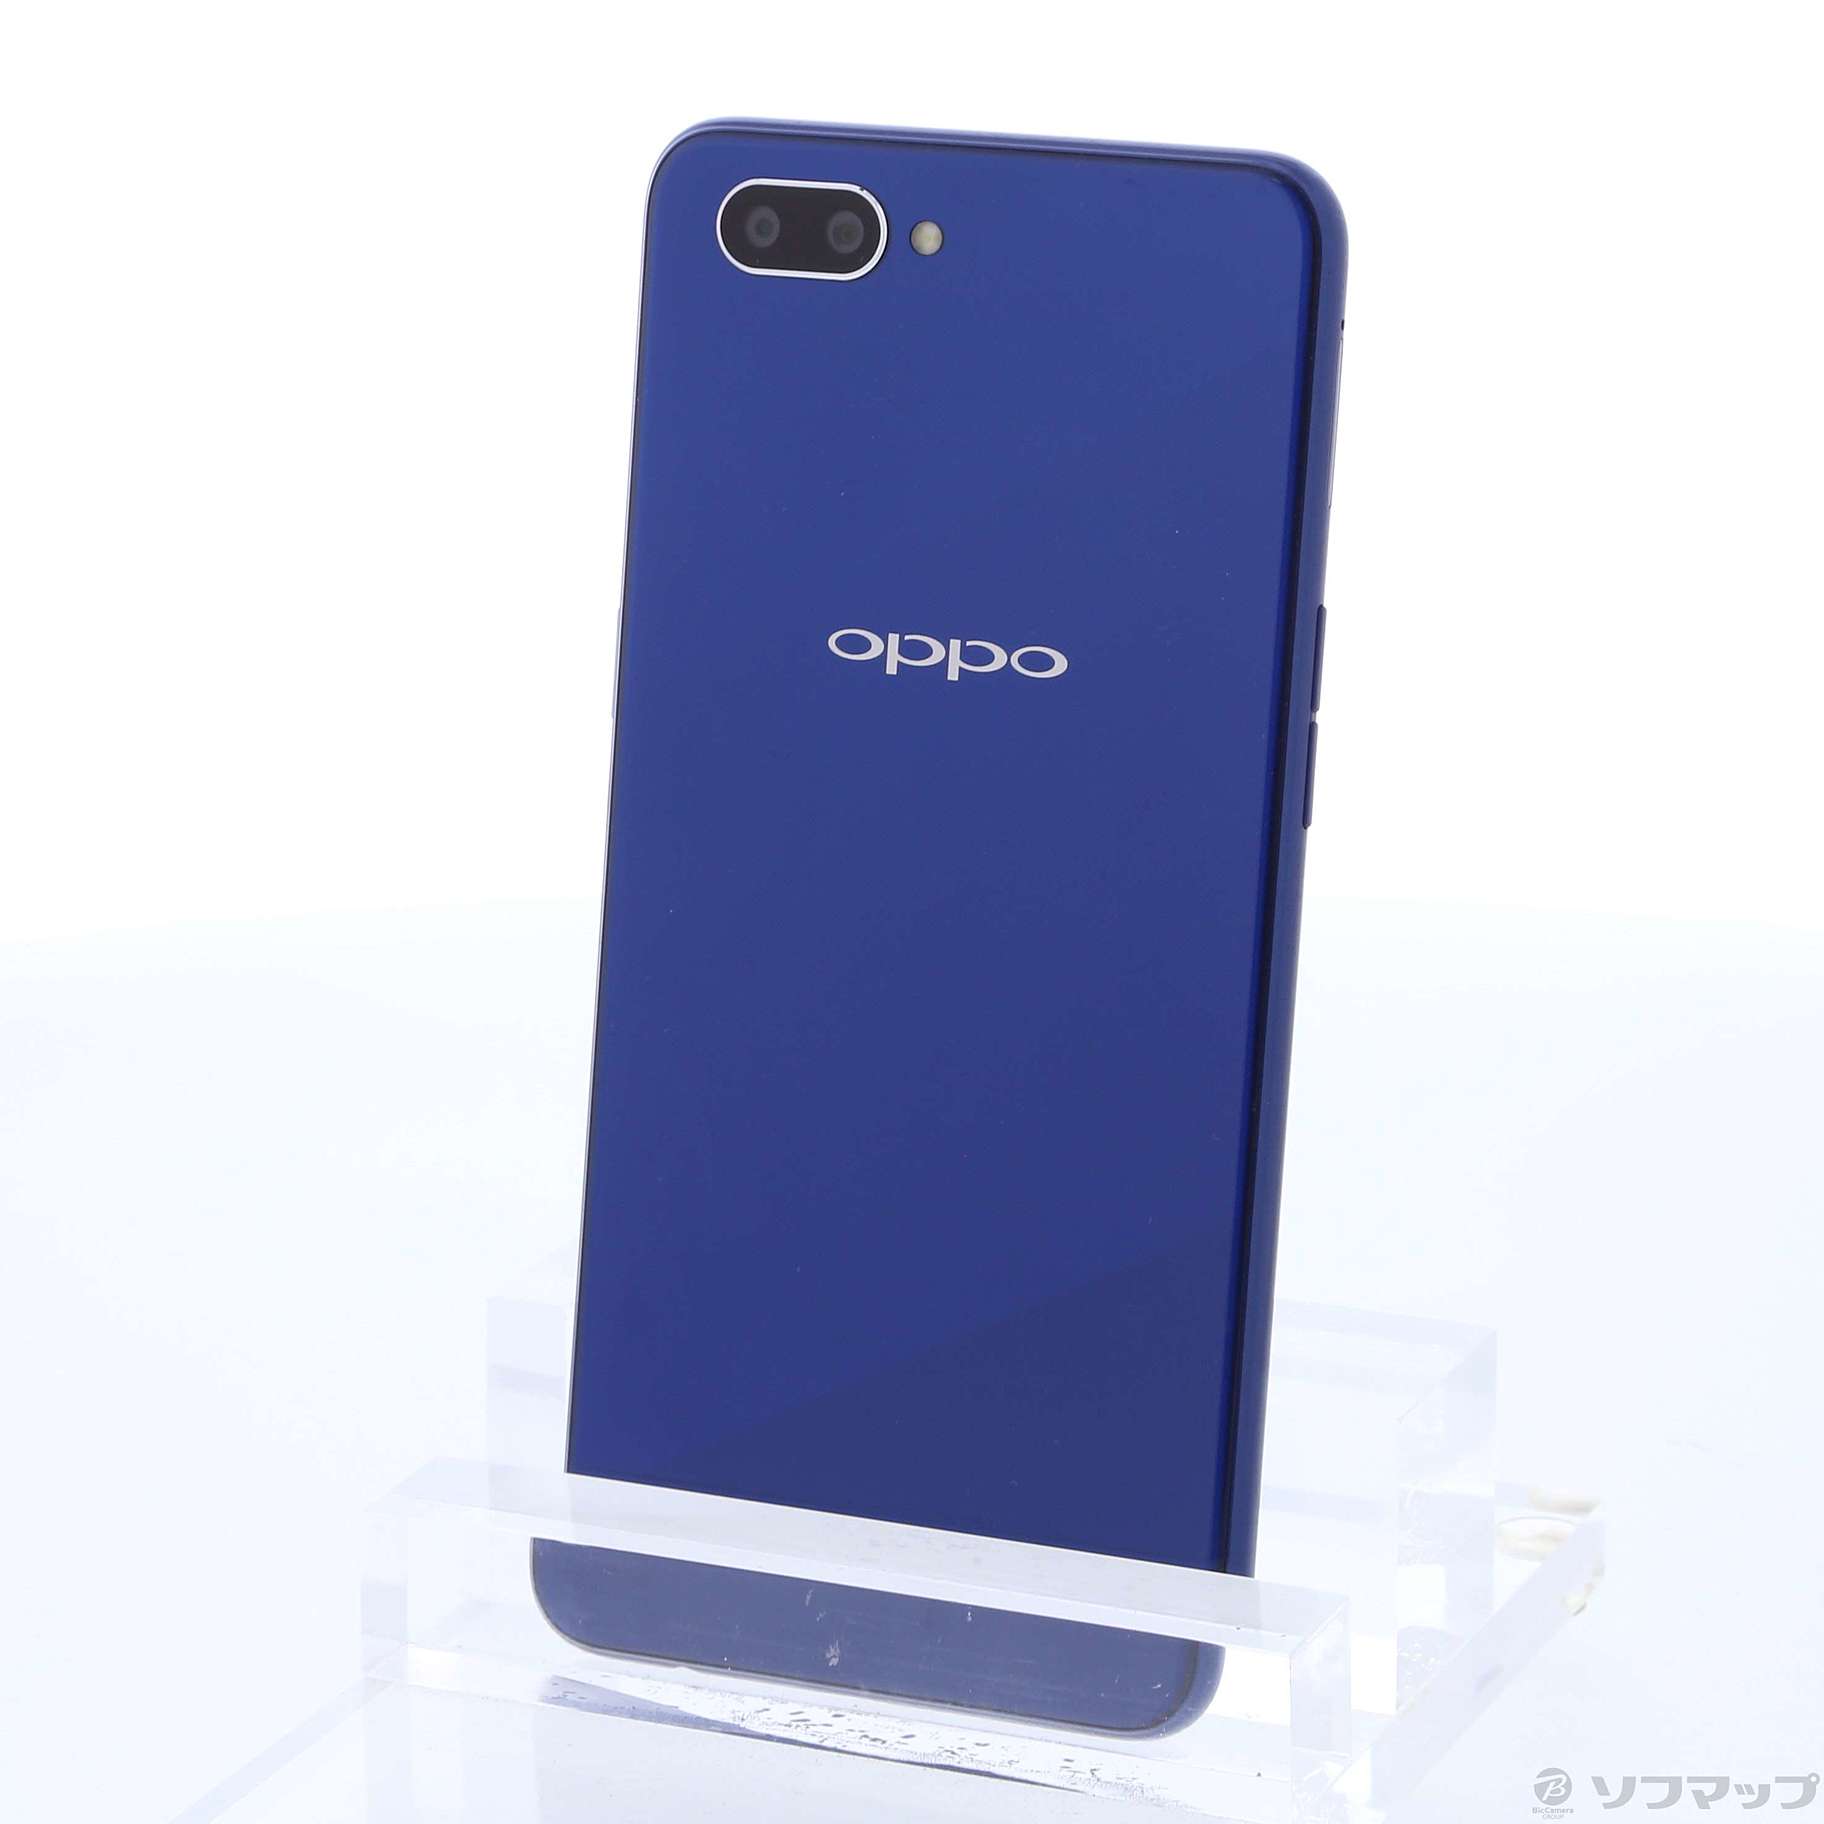 OPPO CPH1851 Mobile Phone